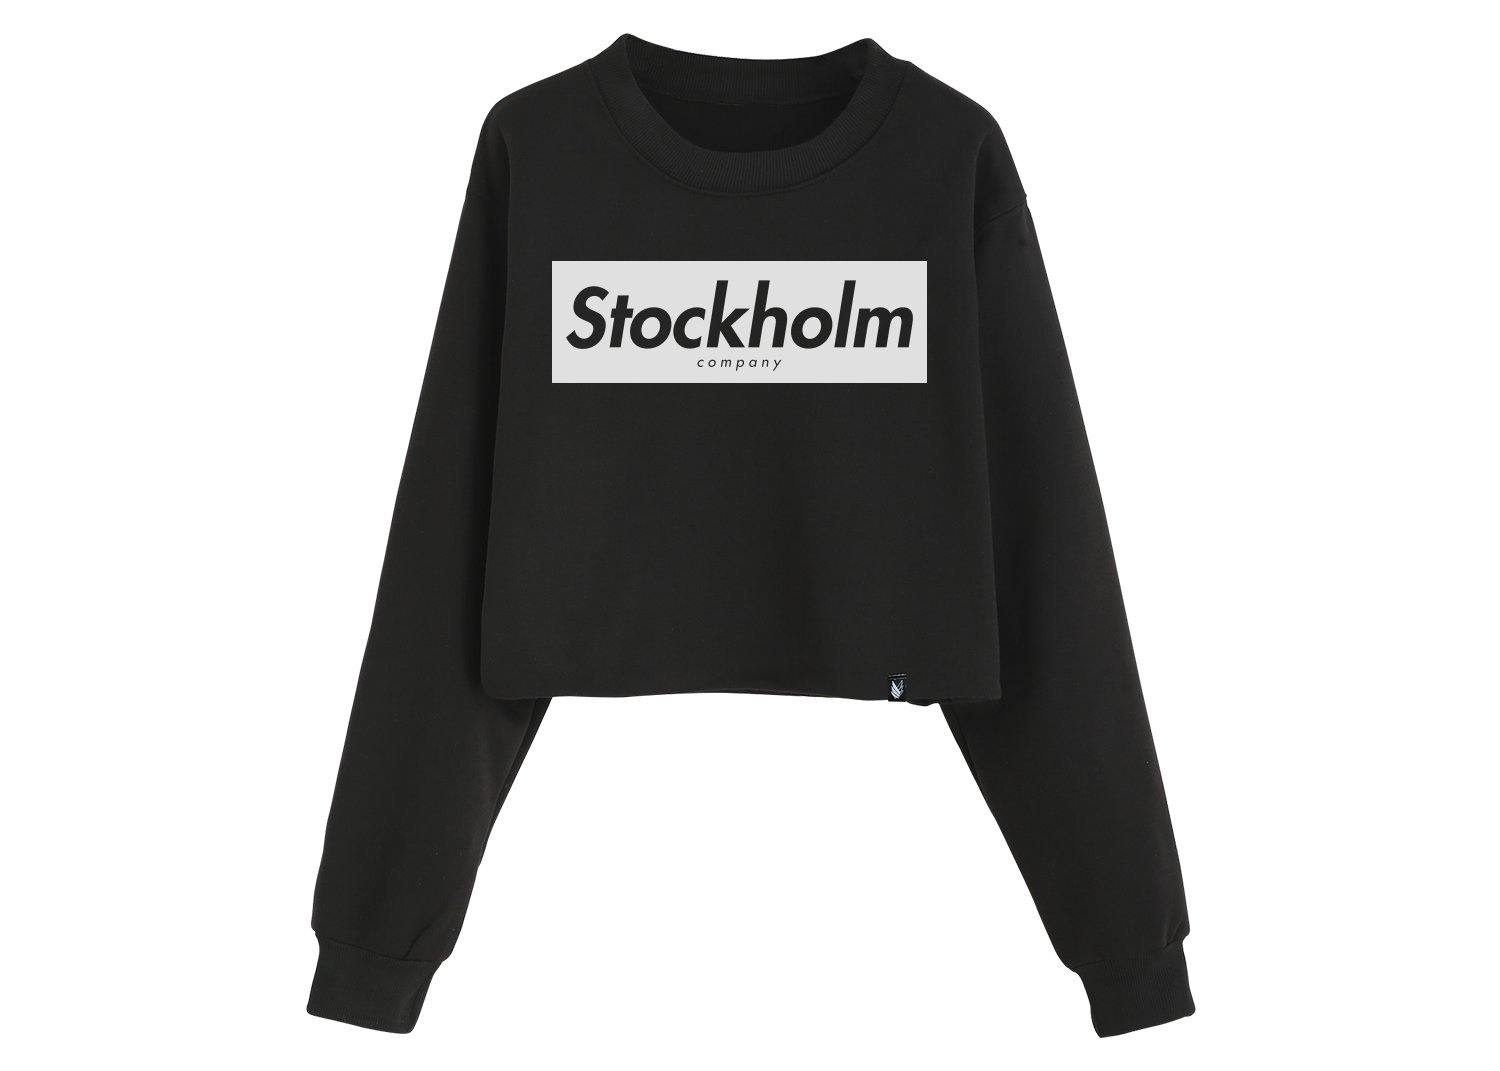 Stockholm Block - Sudadera Crop top - Stockholm Co. - Sudadera - shop girls, stkm originals, sudadera